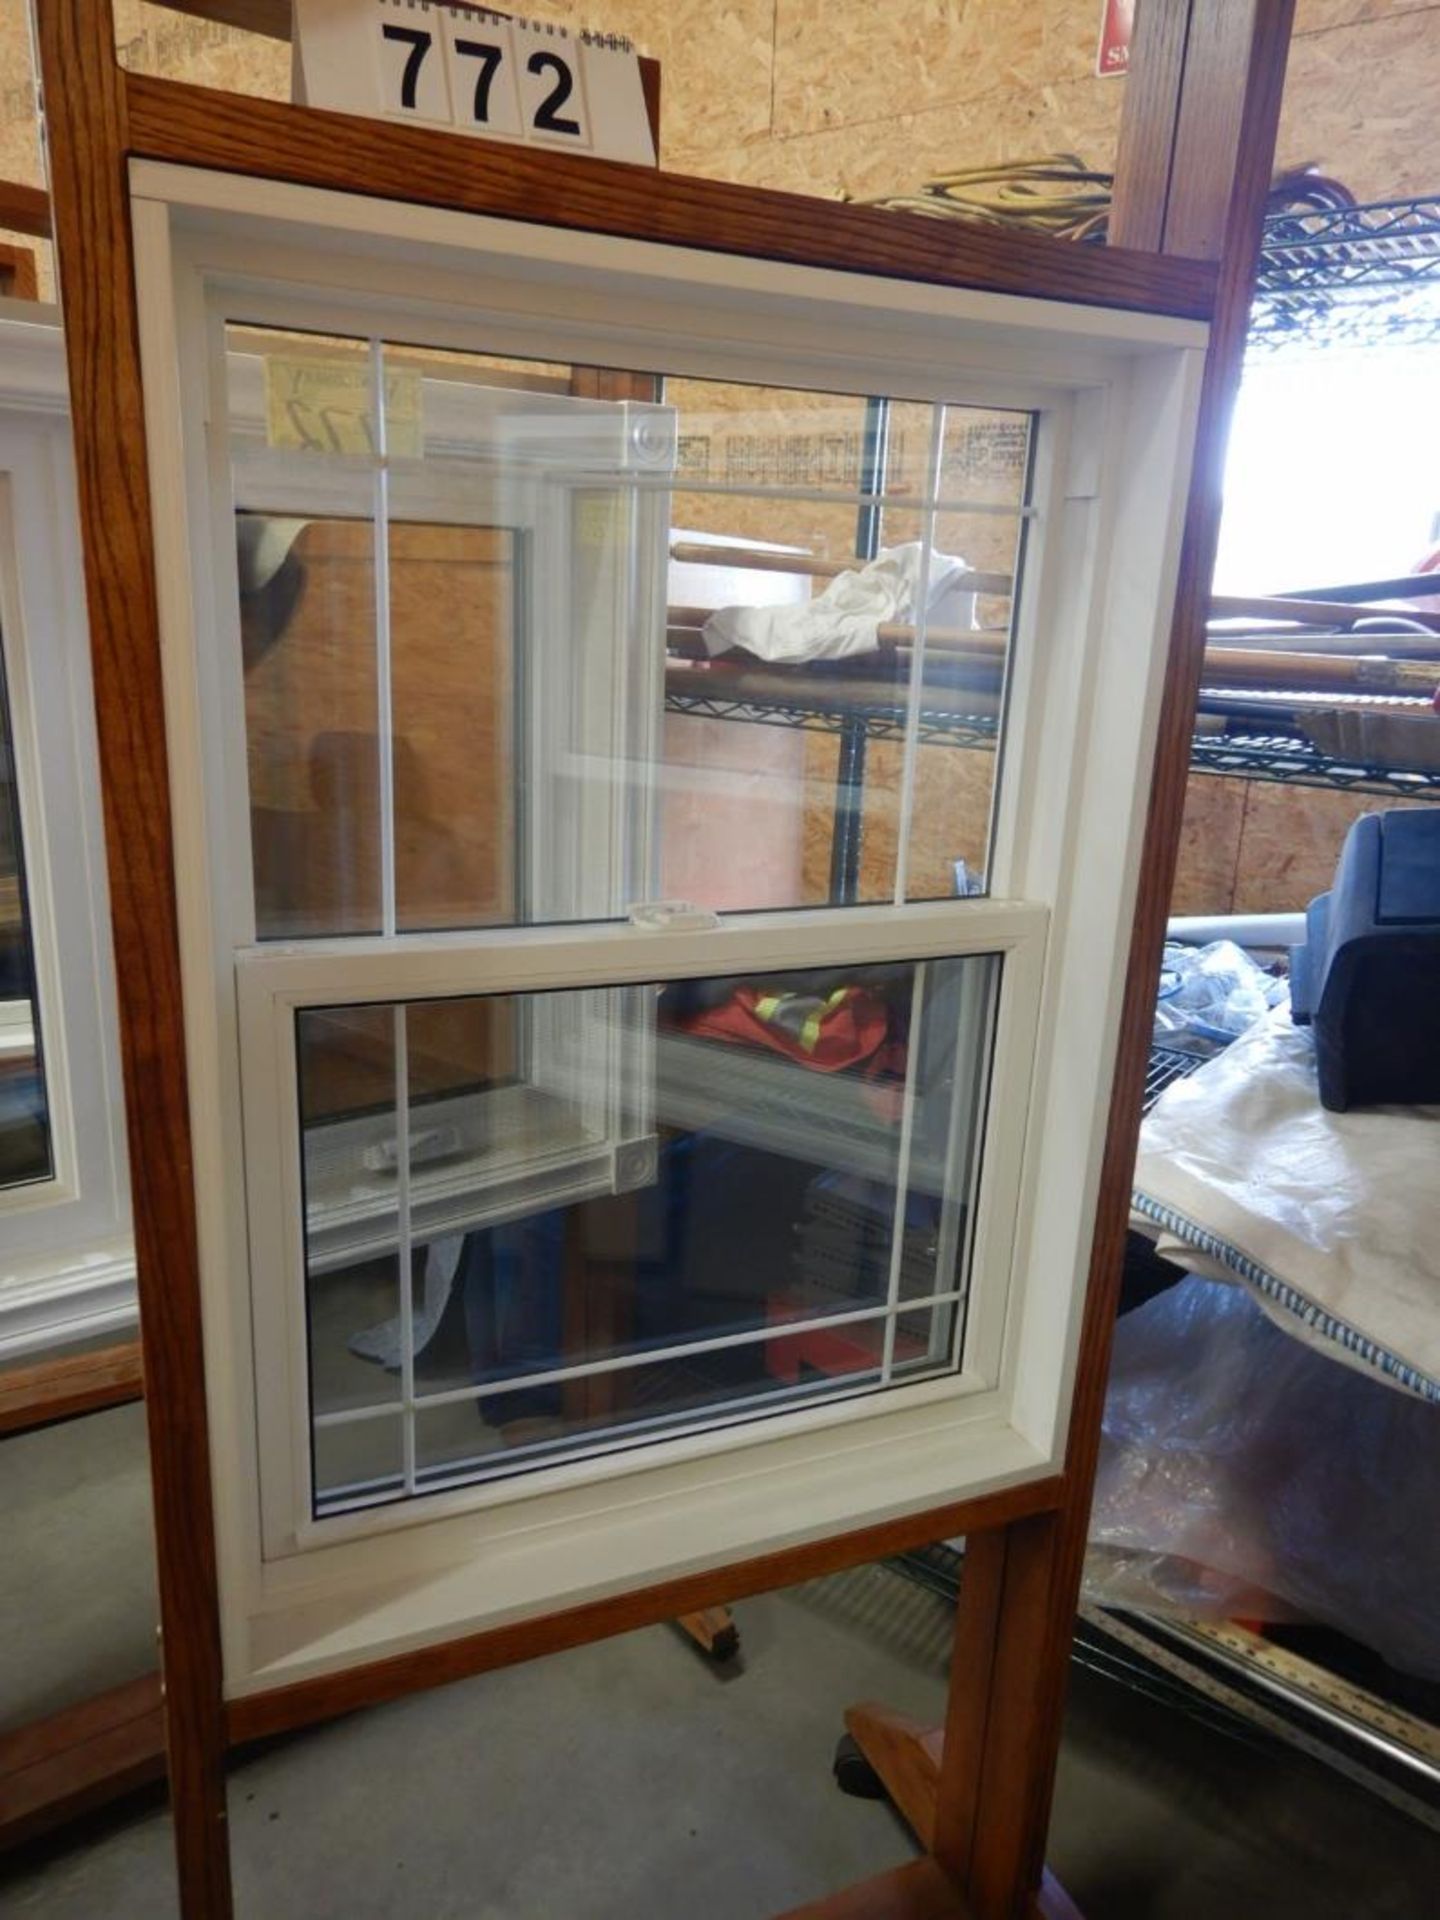 32 X 42" WHITE VINYL WINDOW ASSEMBLY W/ SHOW ROOM MERCHANDISER - Image 3 of 3